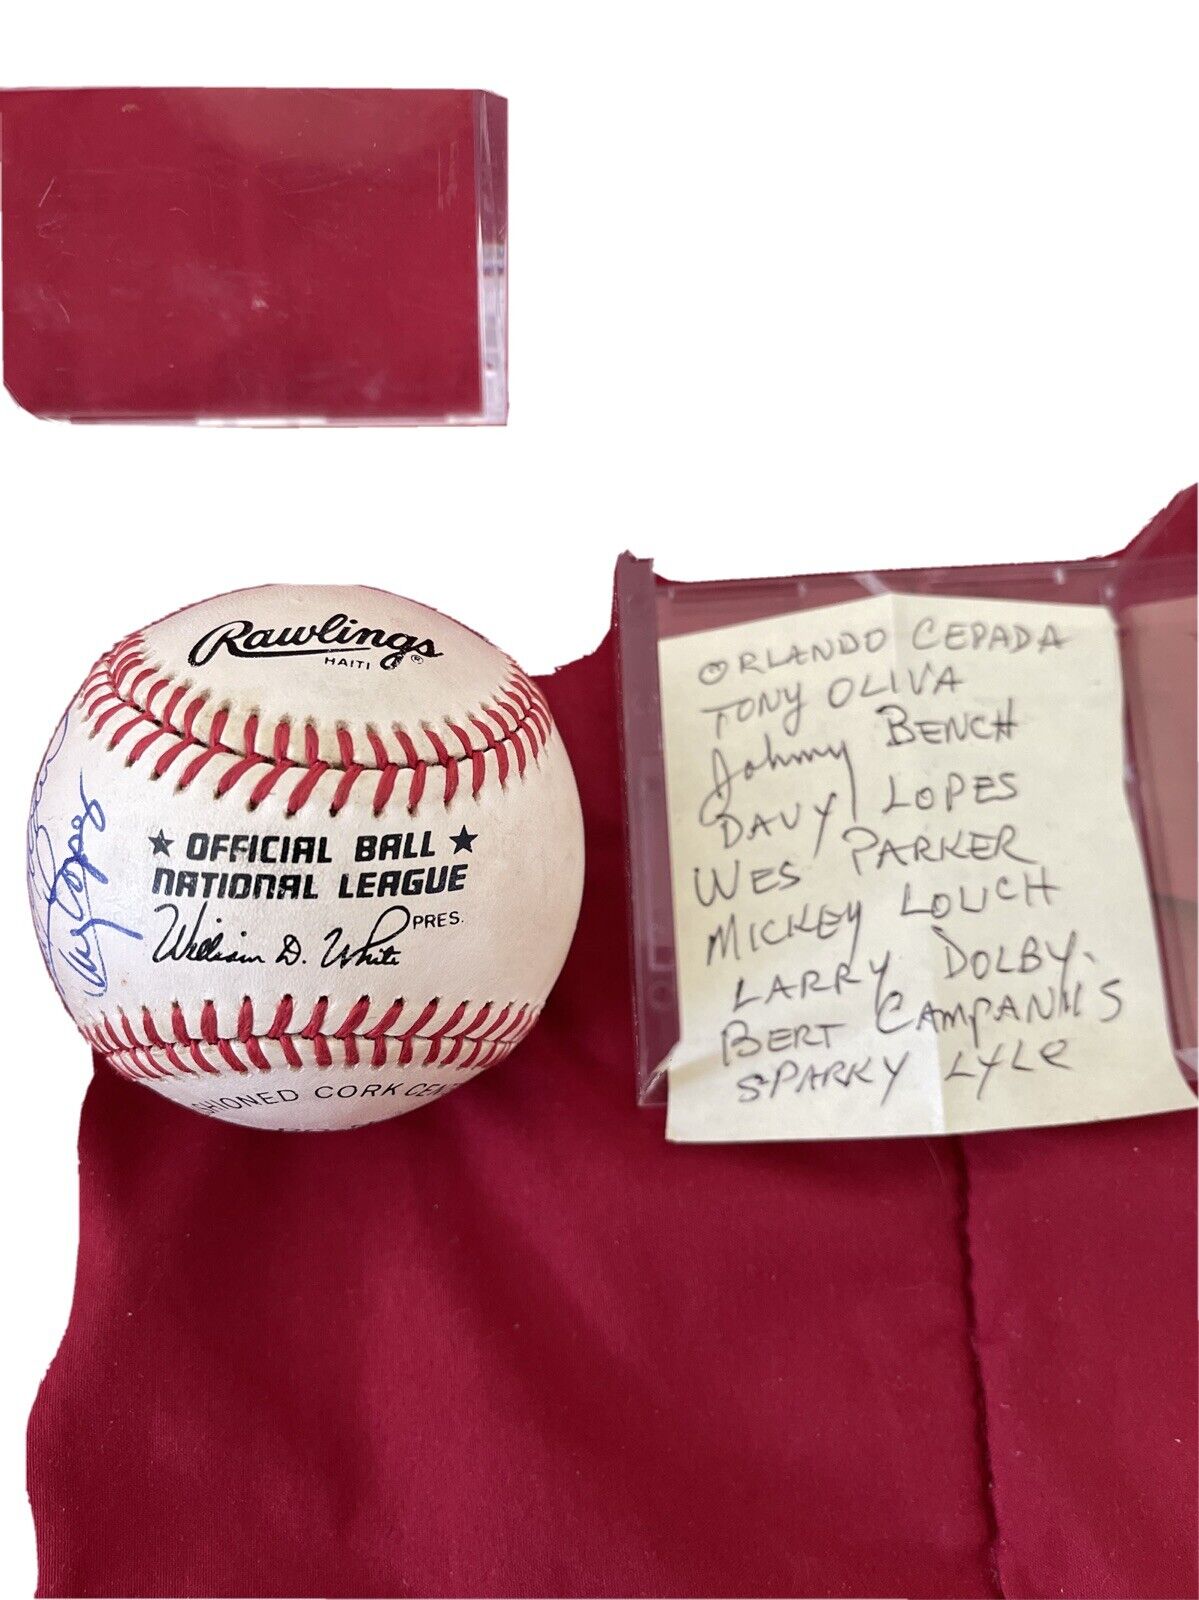 Multi autograph baseball Hall of Famer’s dodgers